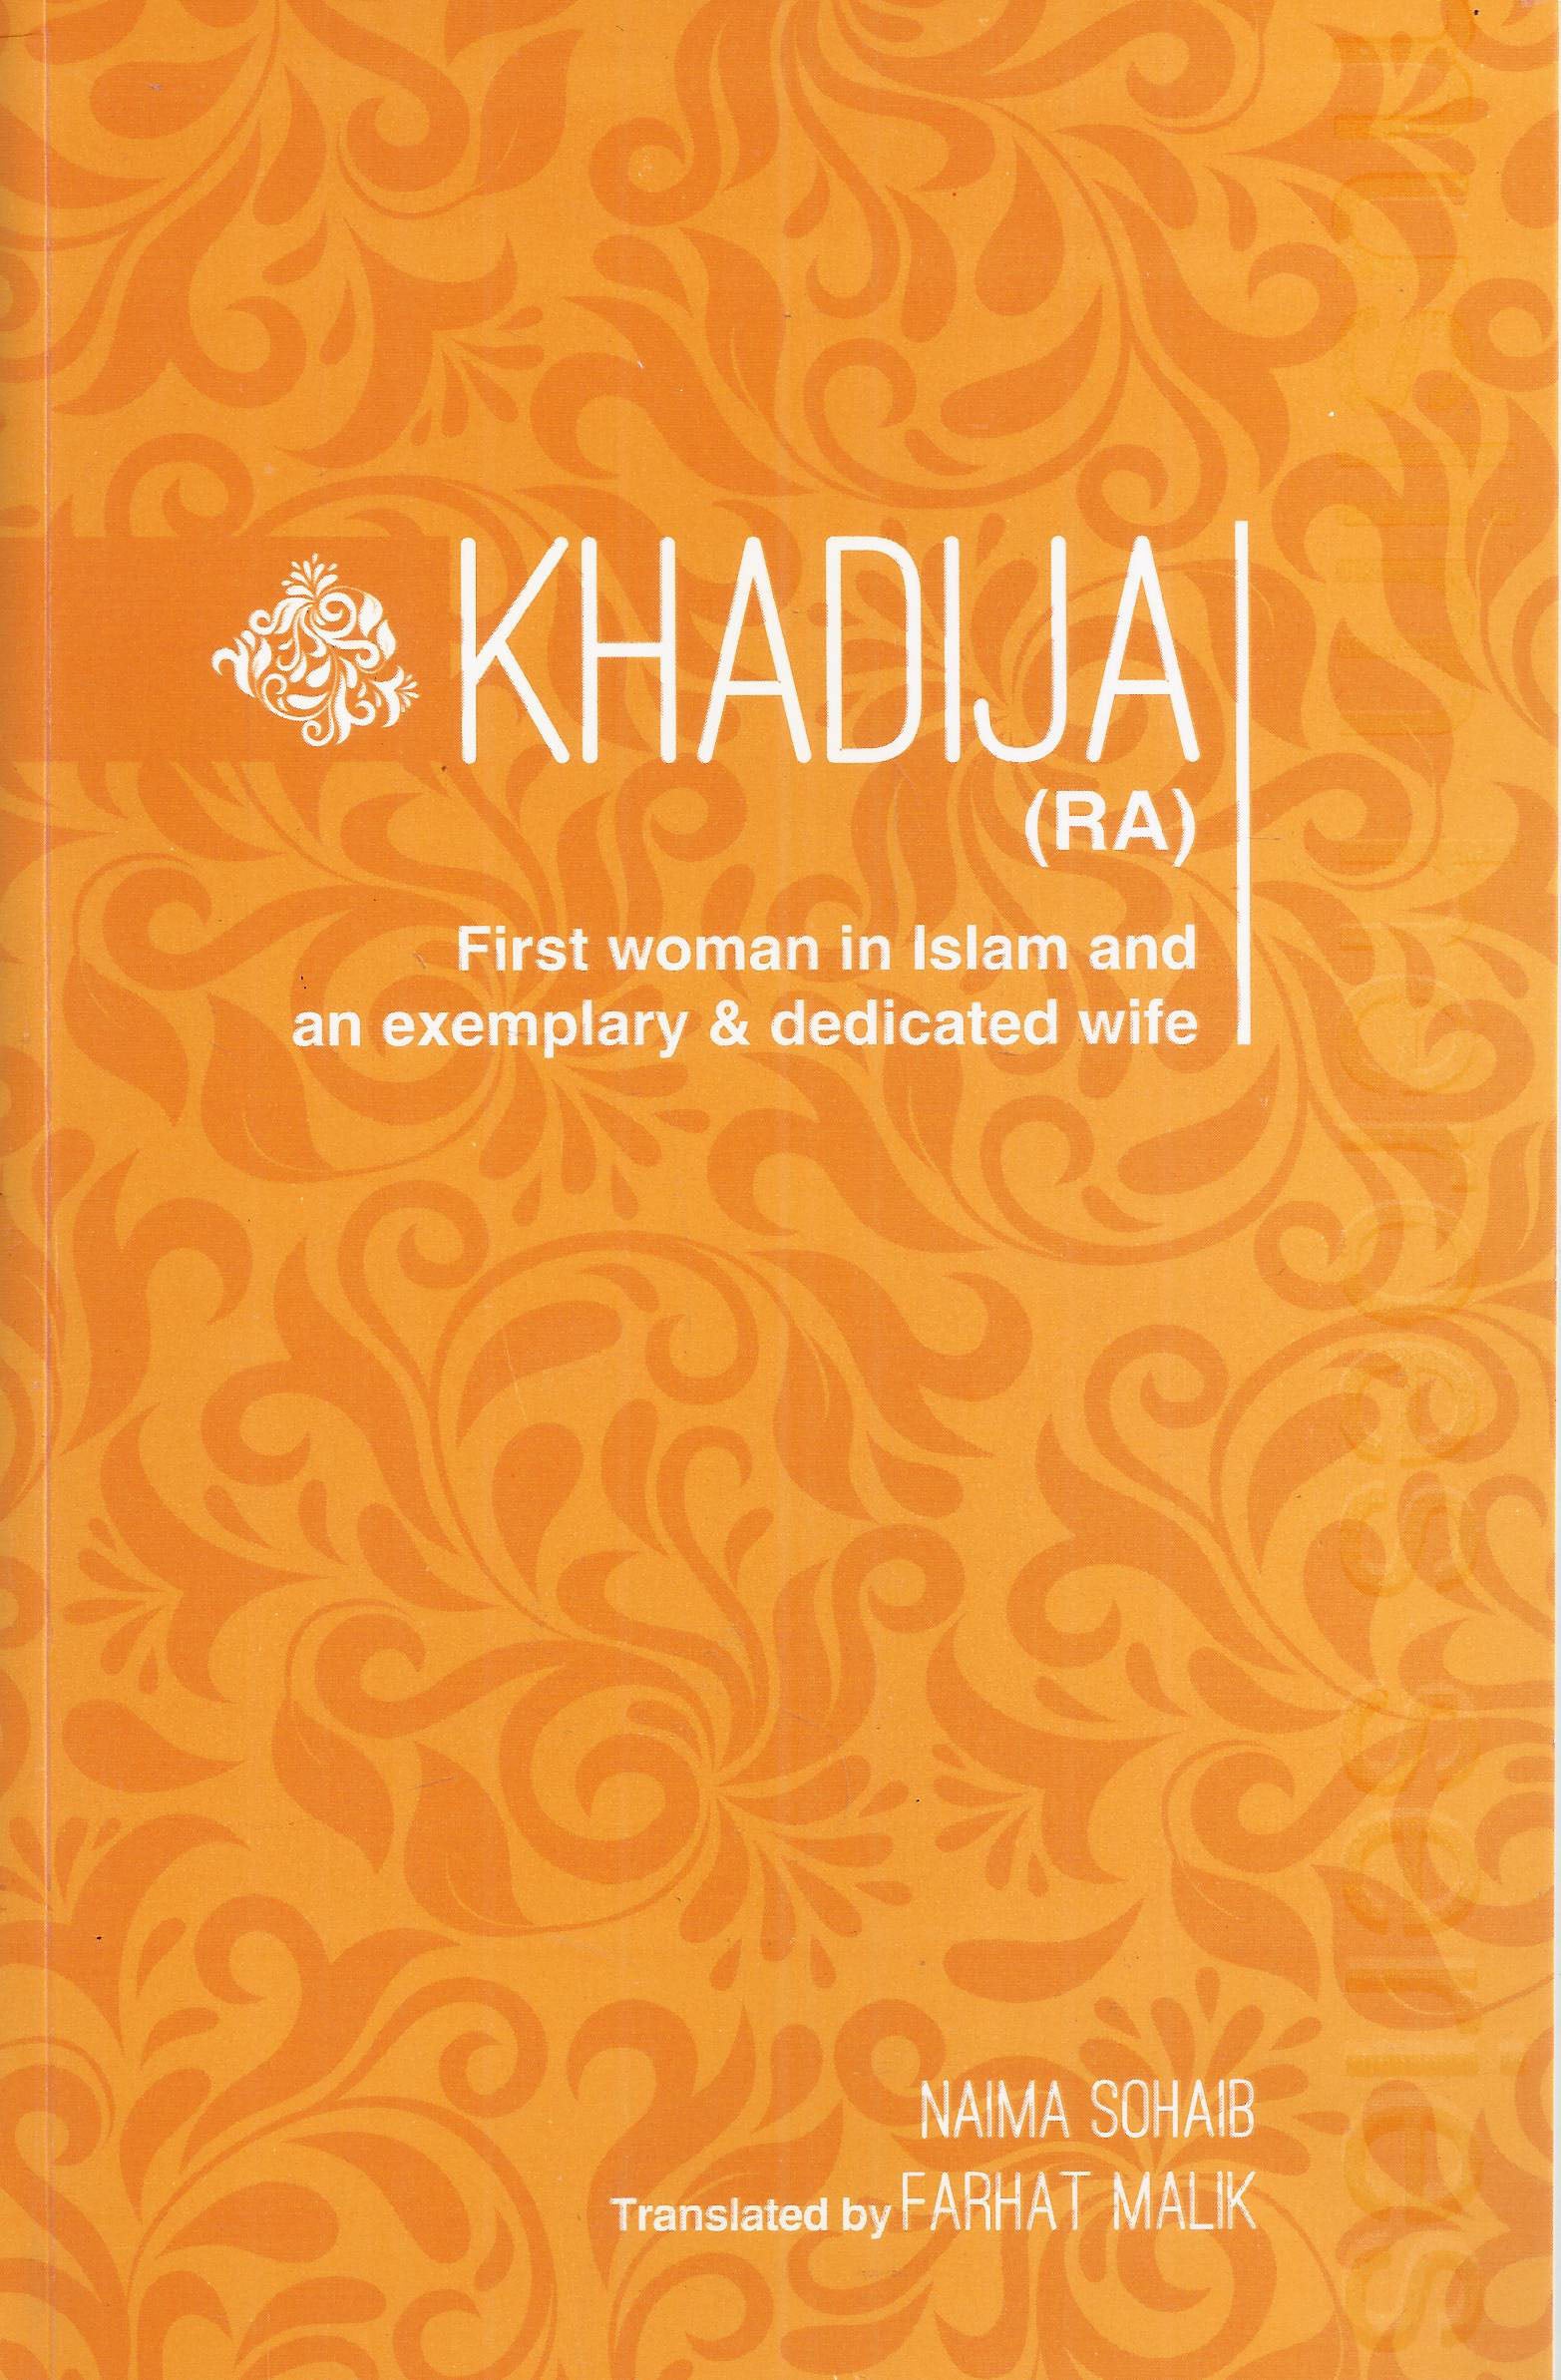 Khadija- The First Woman In Islam And An Exemplary & Dedicated Wife (Muslim Heroes Series)